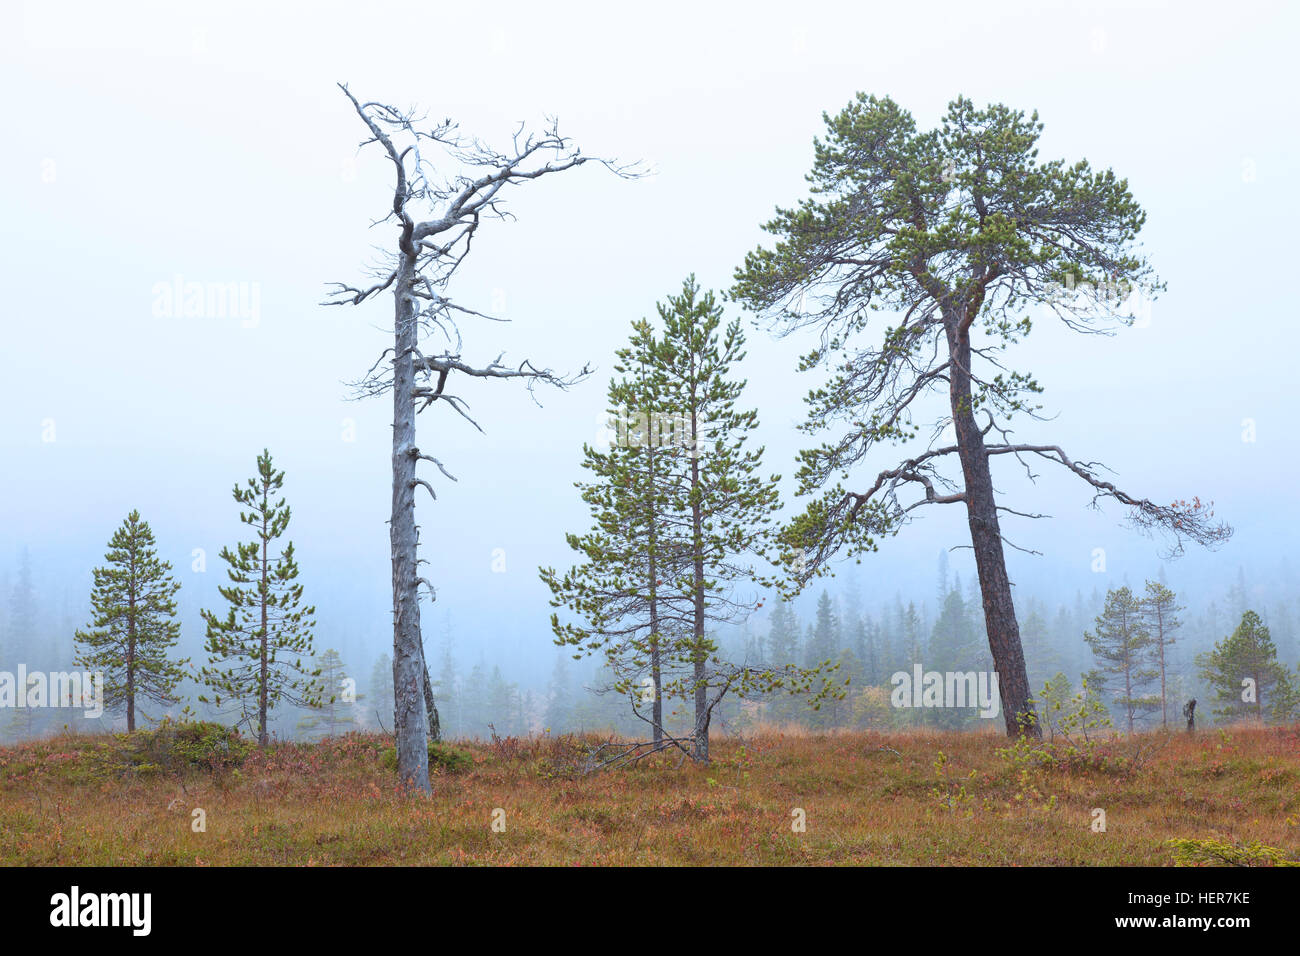 Old Scots pines (Pinus sylvestris) in moorland in the mist, Fulufjaellet / Fulufjället National Park, Älvdalen, Dalarna, Sweden Stock Photo